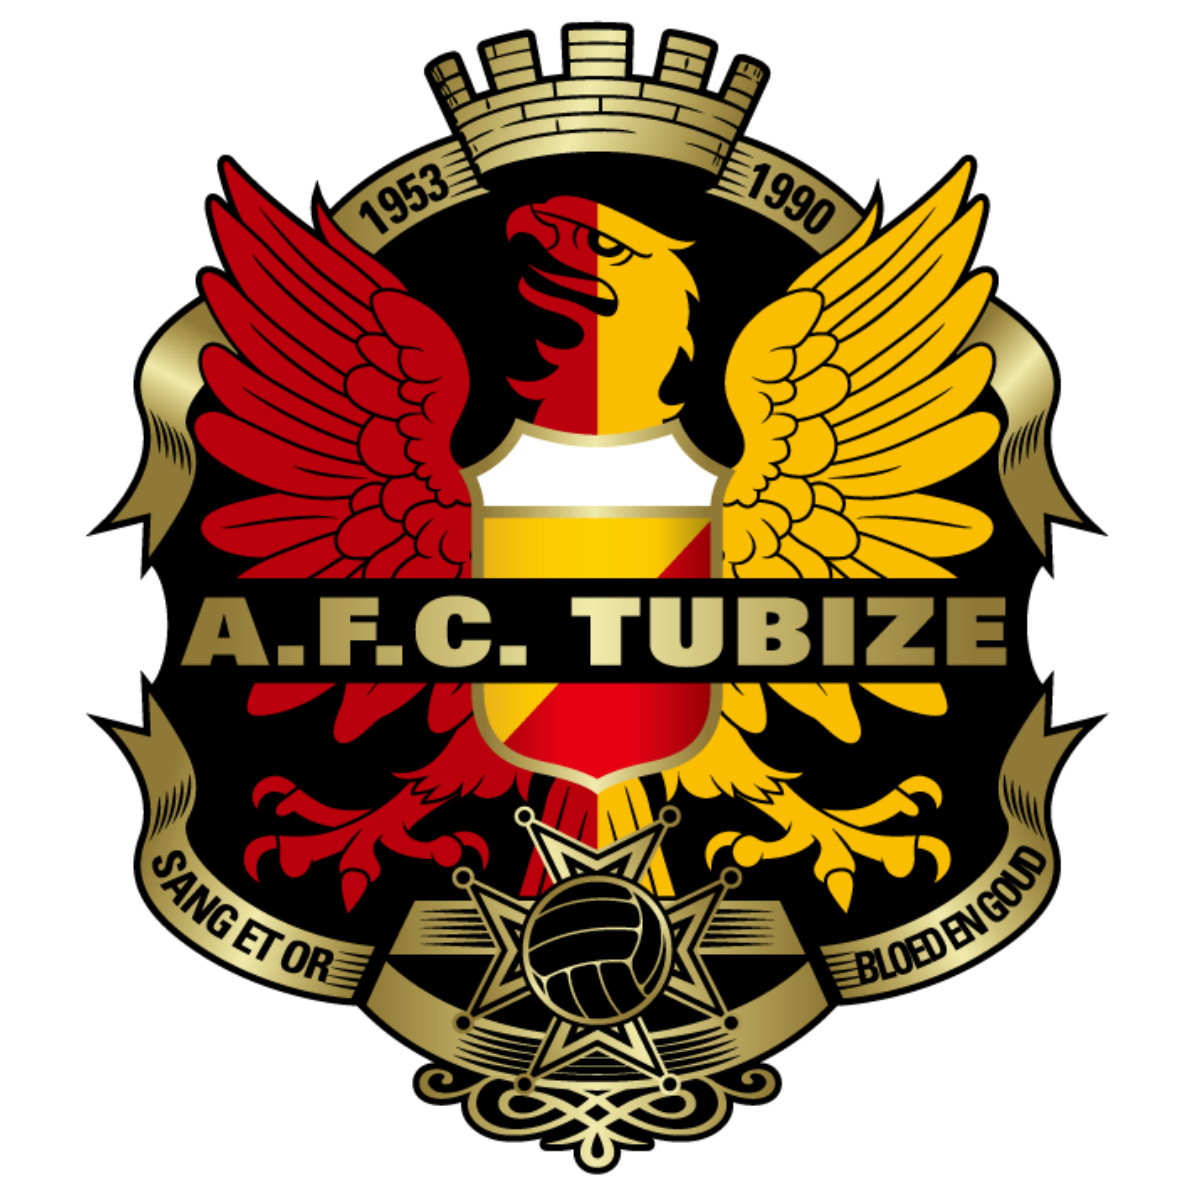 Tubize team logo